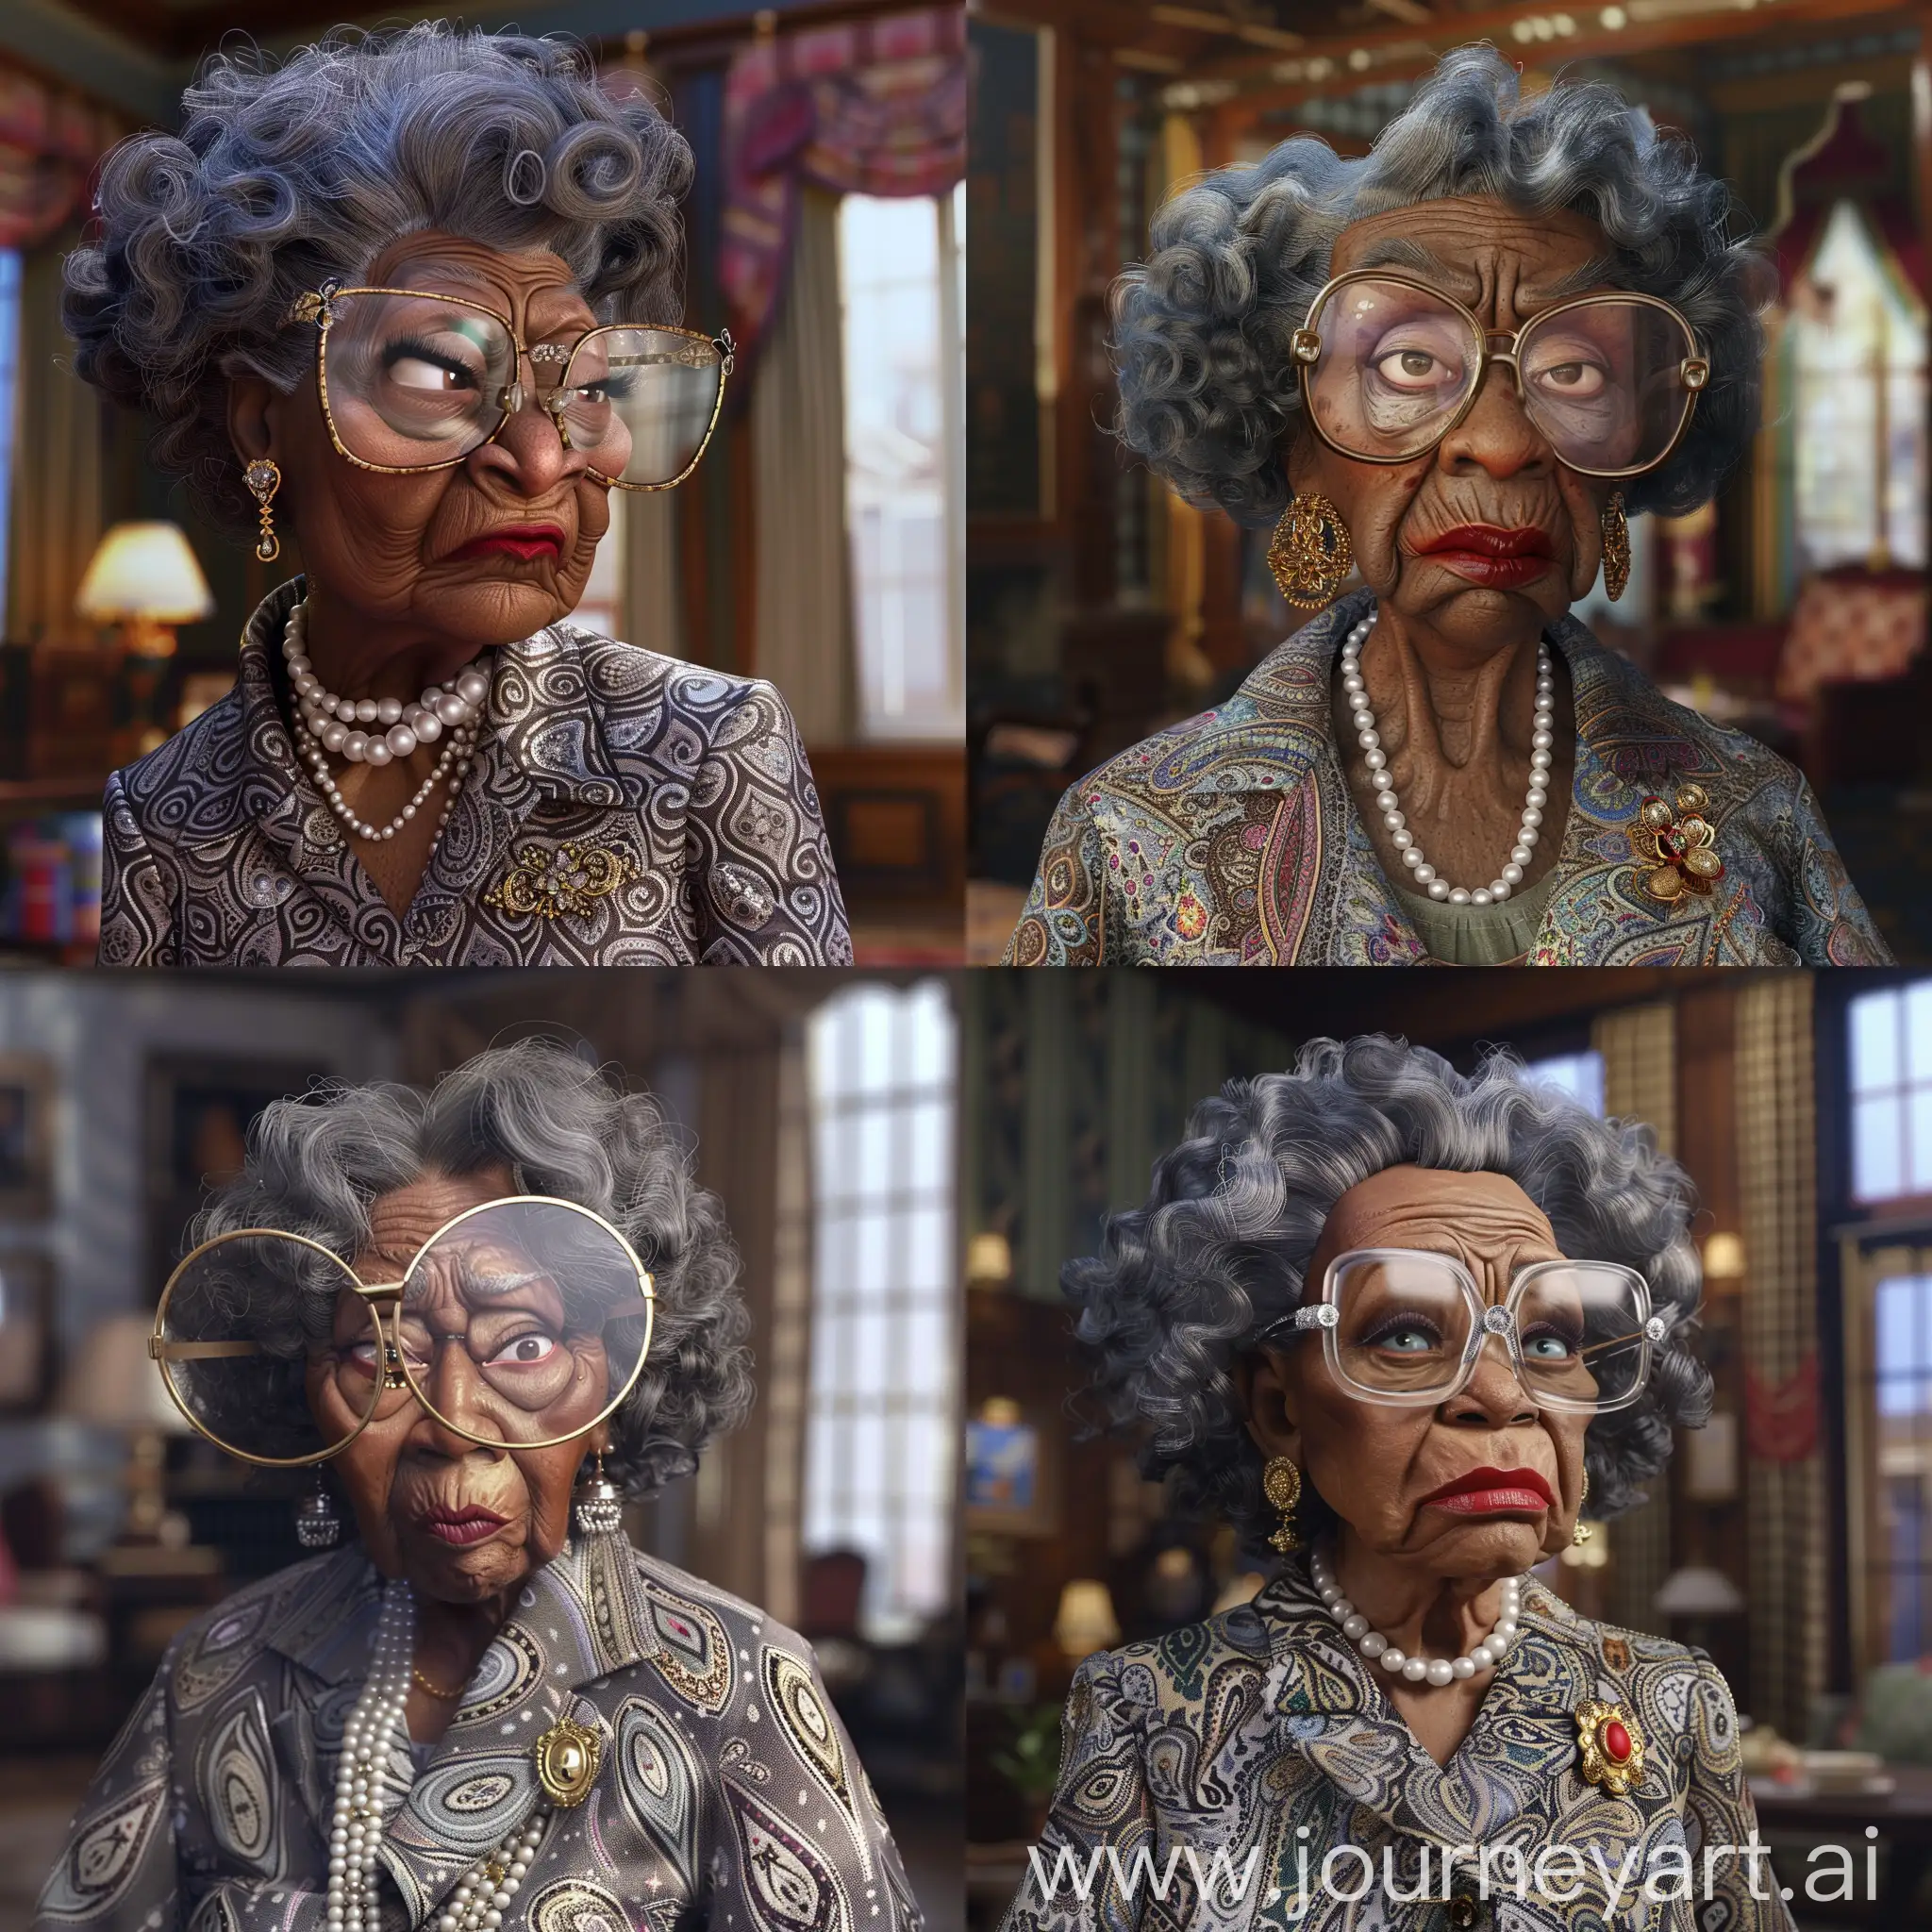 Elegant-Elderly-Woman-Portrait-of-Madea-in-Disney-Pixar-Style